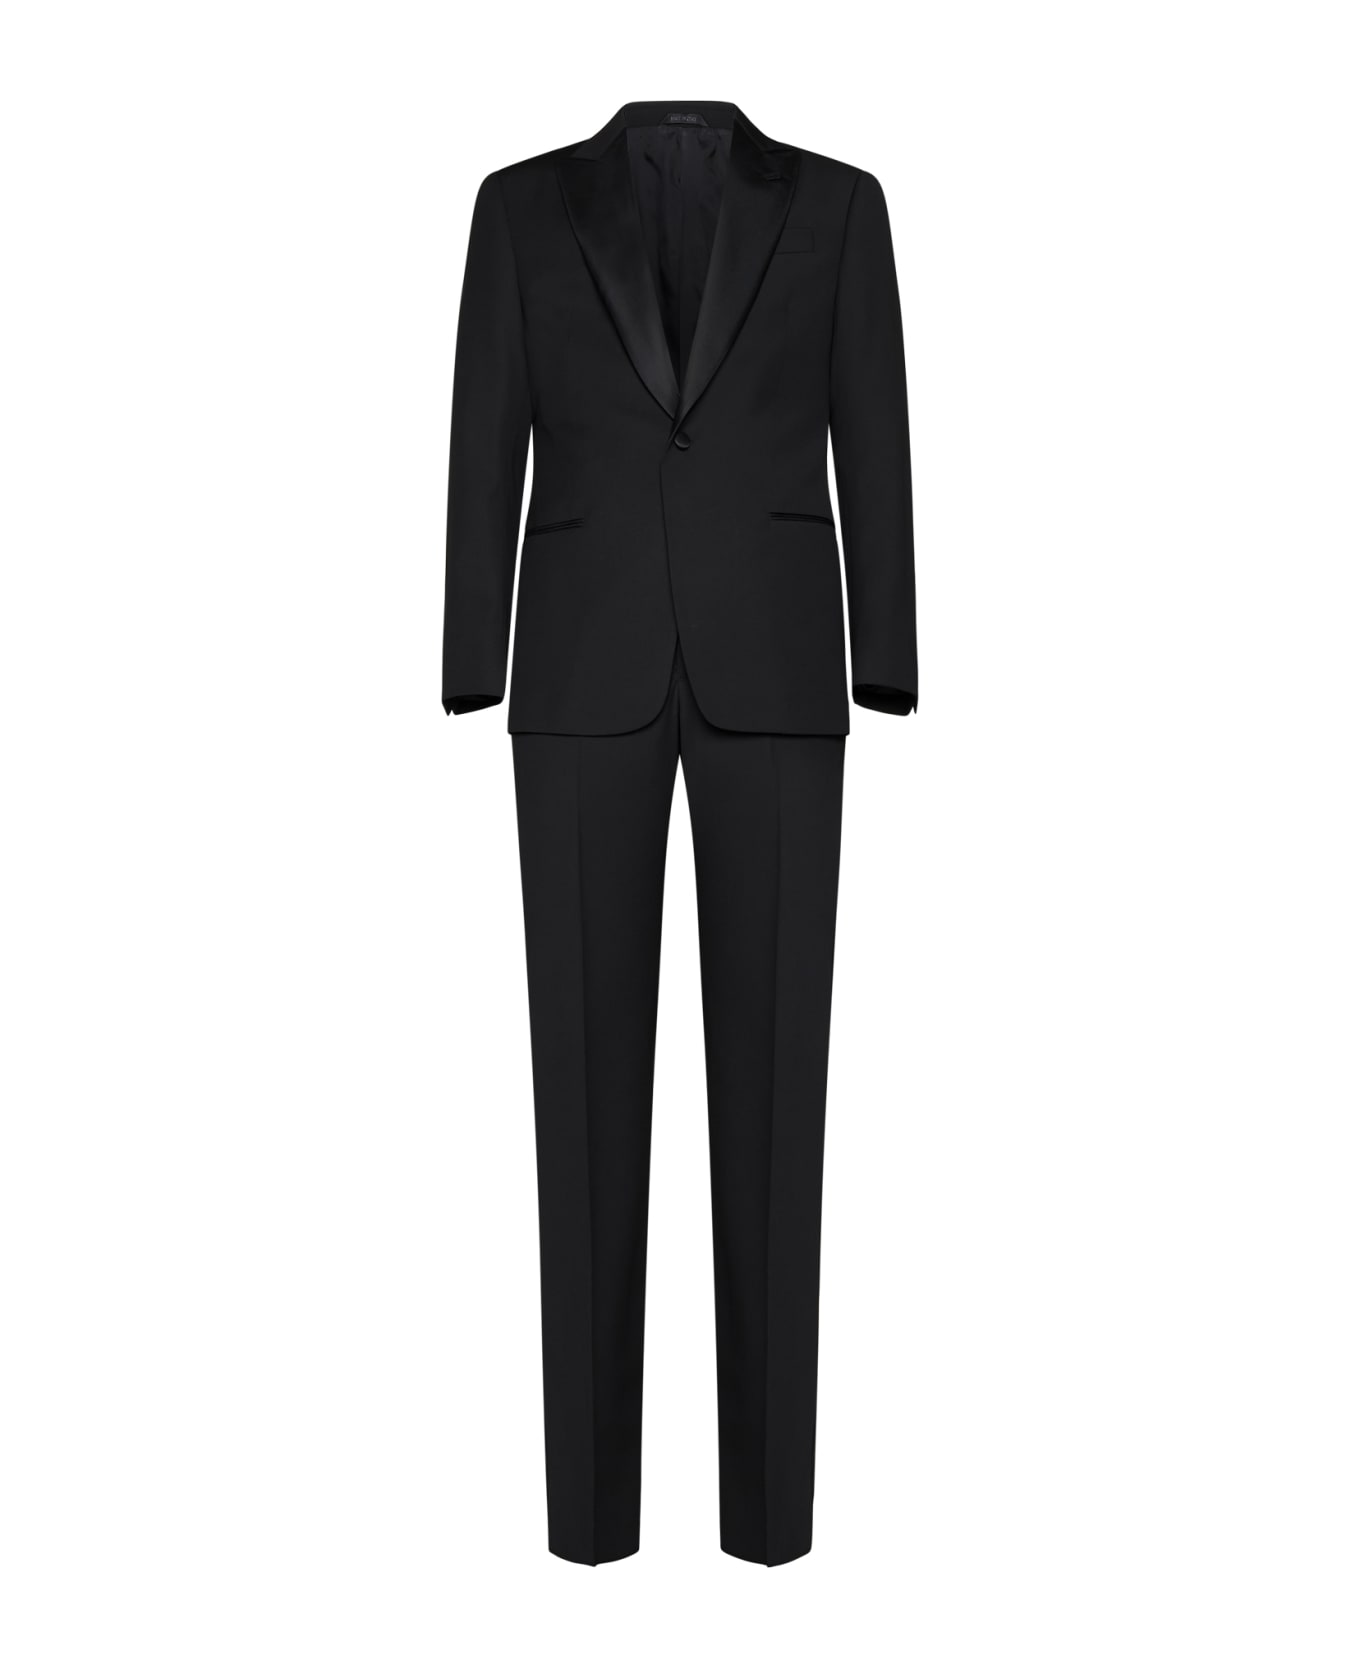 Giorgio Armani Suit - Black beauty